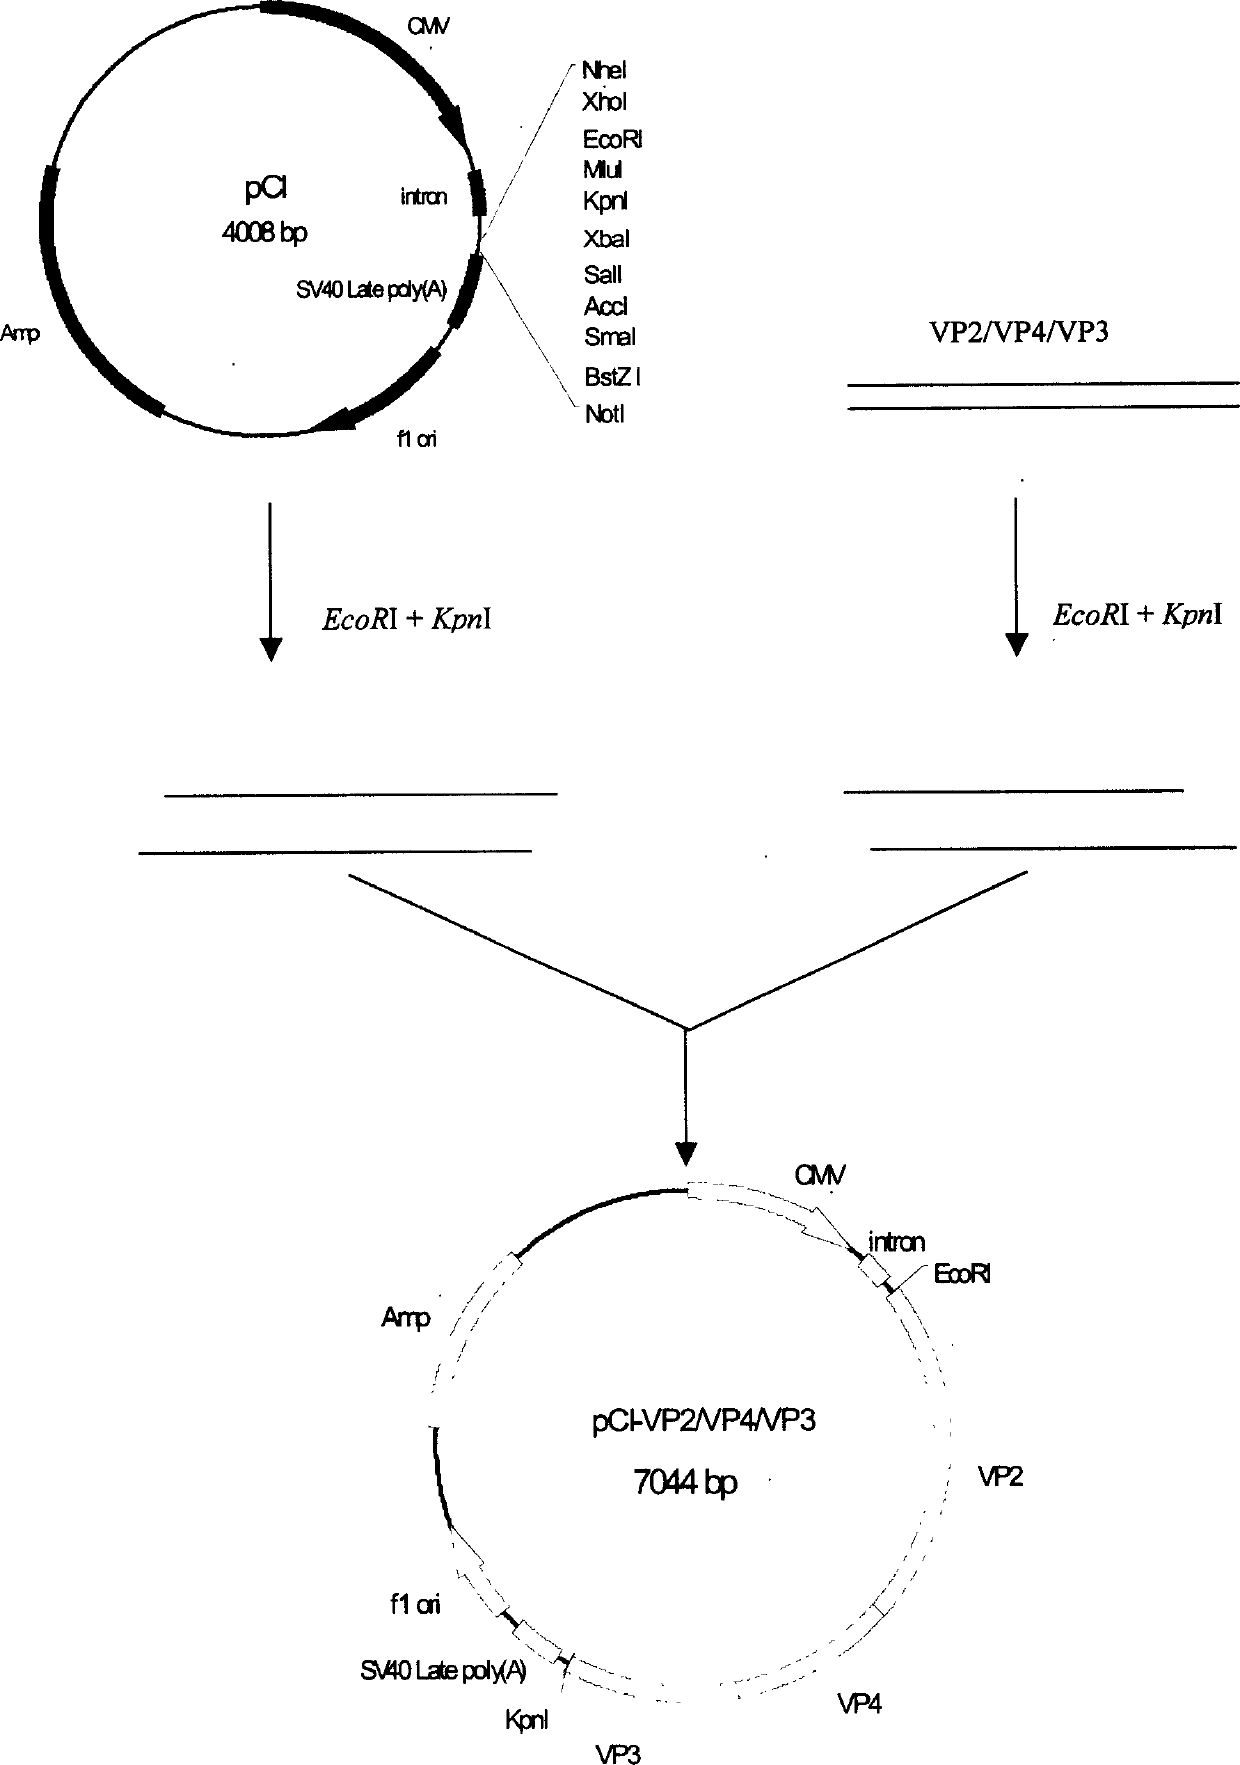 Infectious bursal disease virus (IBDV) polyprotein gene (VP2/VP4/VP3), eukaryon expressing plasmid, DNA vaccine